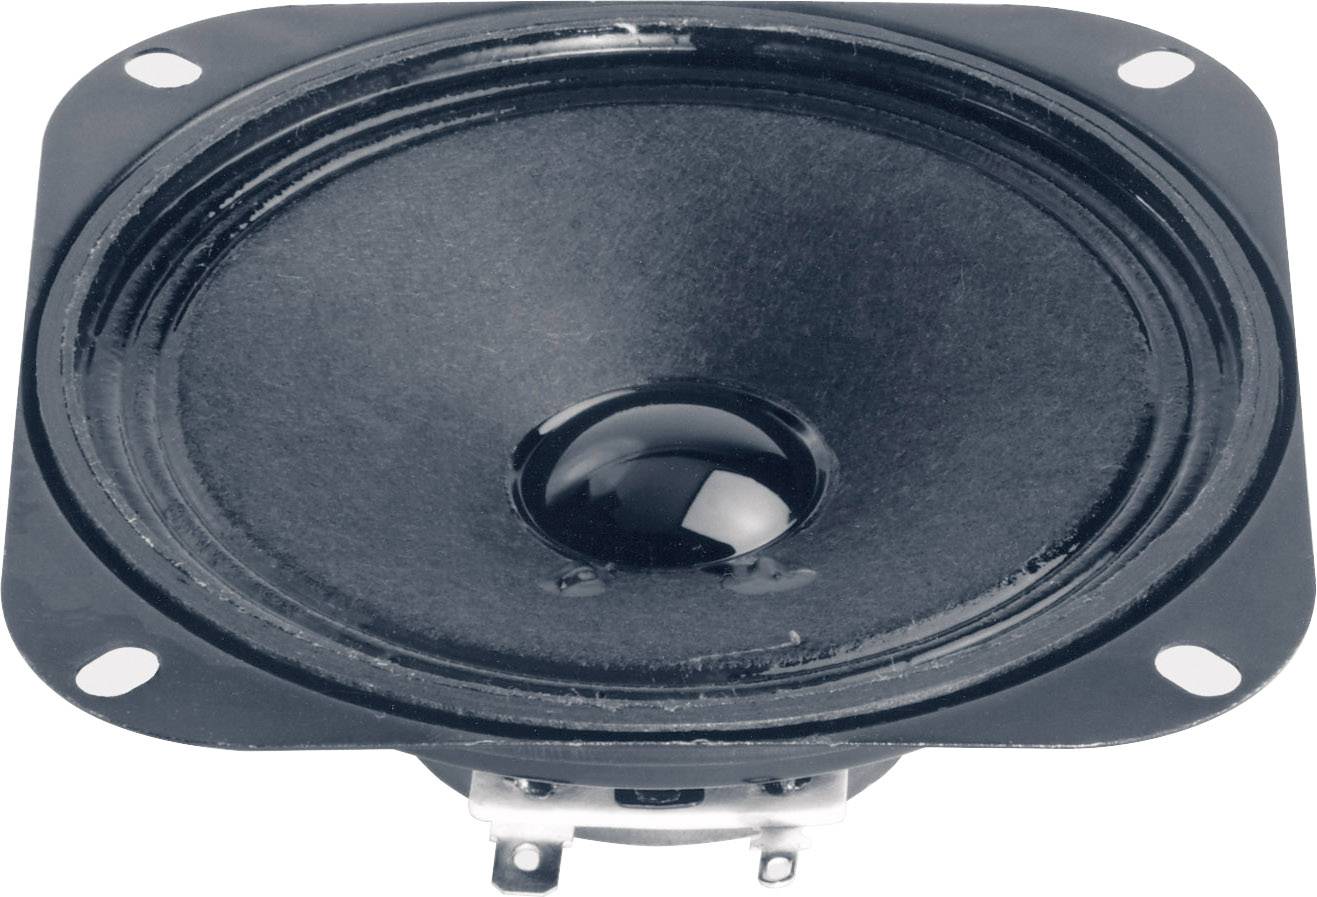 VISATON Einbaulautsprecher - 10 cm (4?) fullrange speaker with high efficiency and balanced frequenc